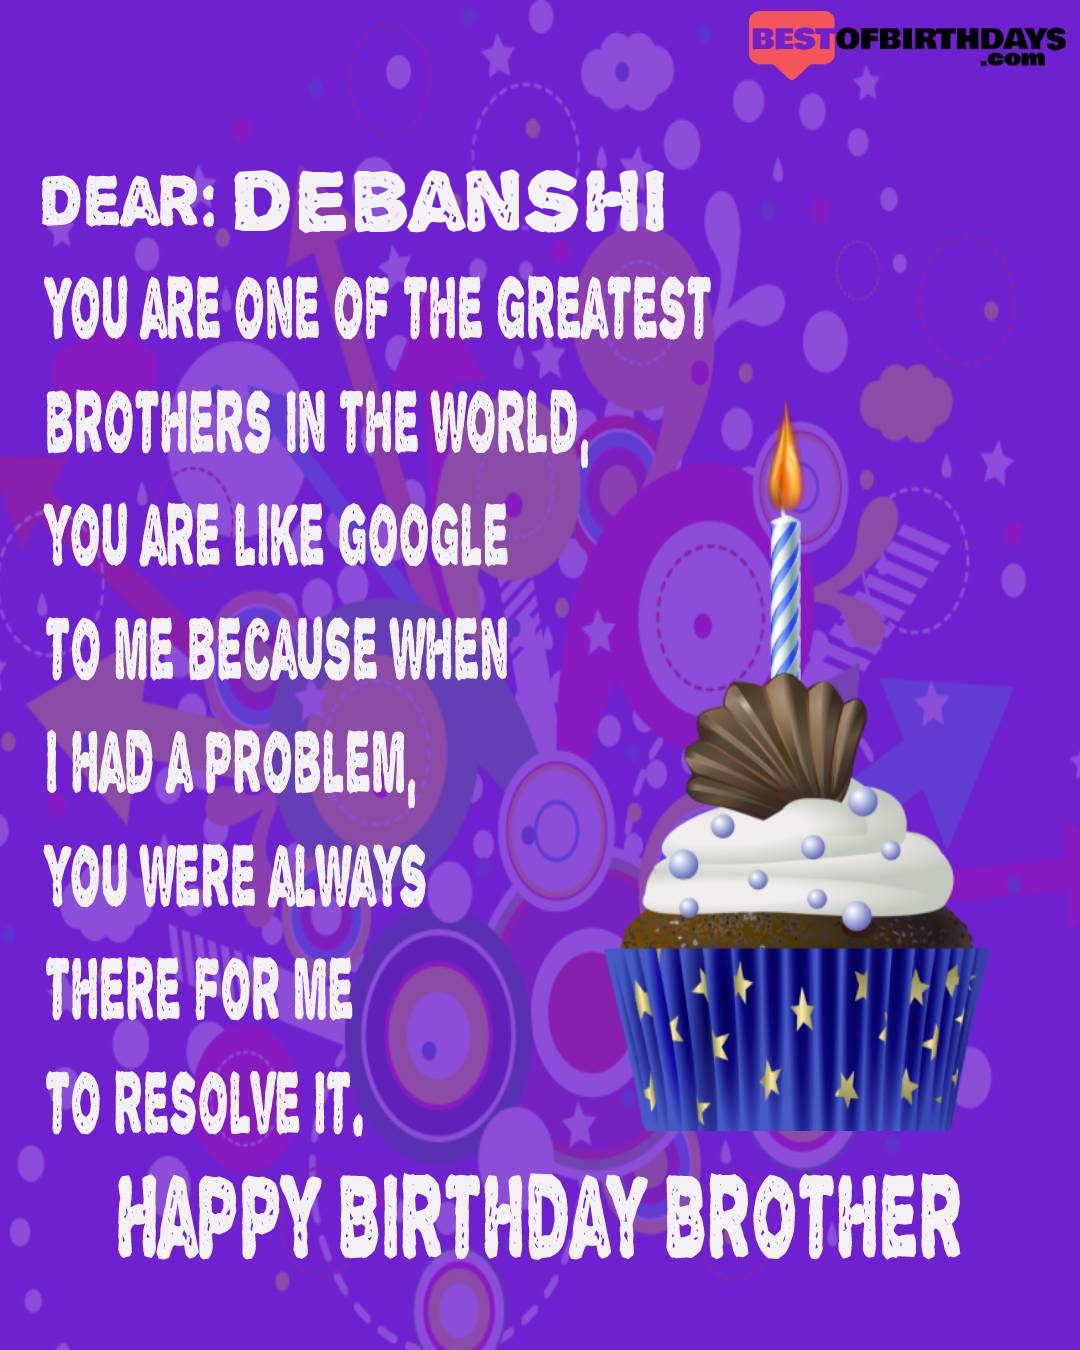 Happy birthday debanshi bhai brother bro